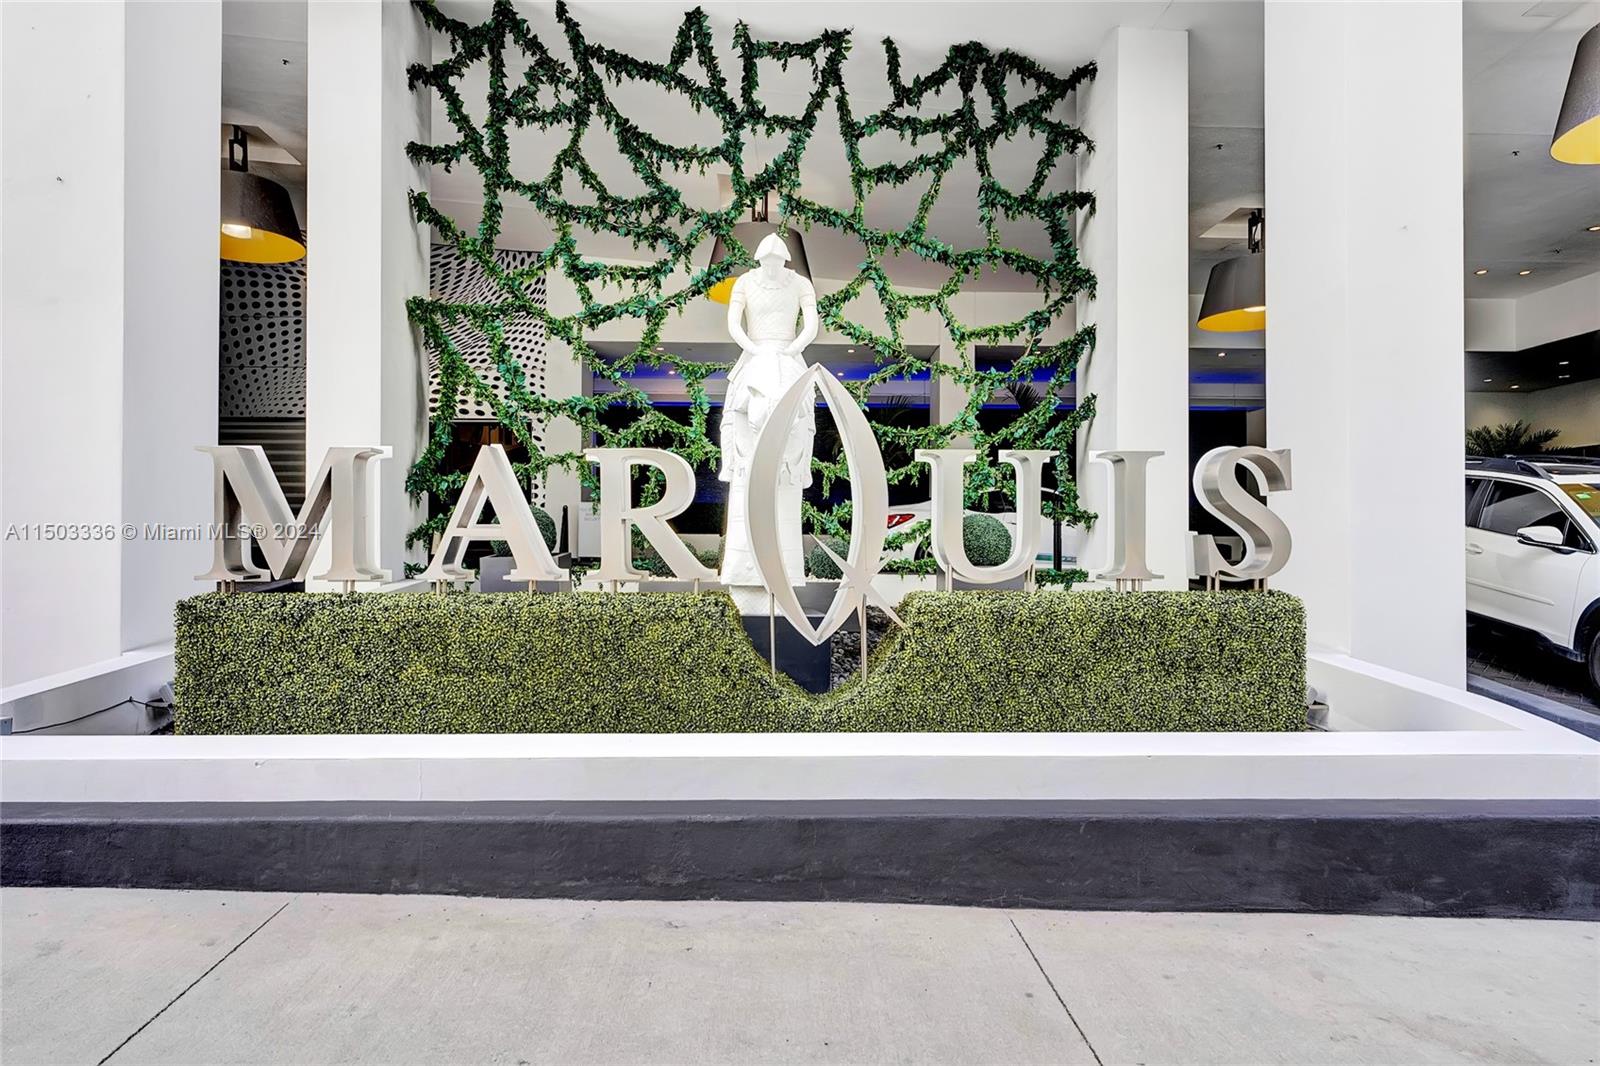 Marquis image #60